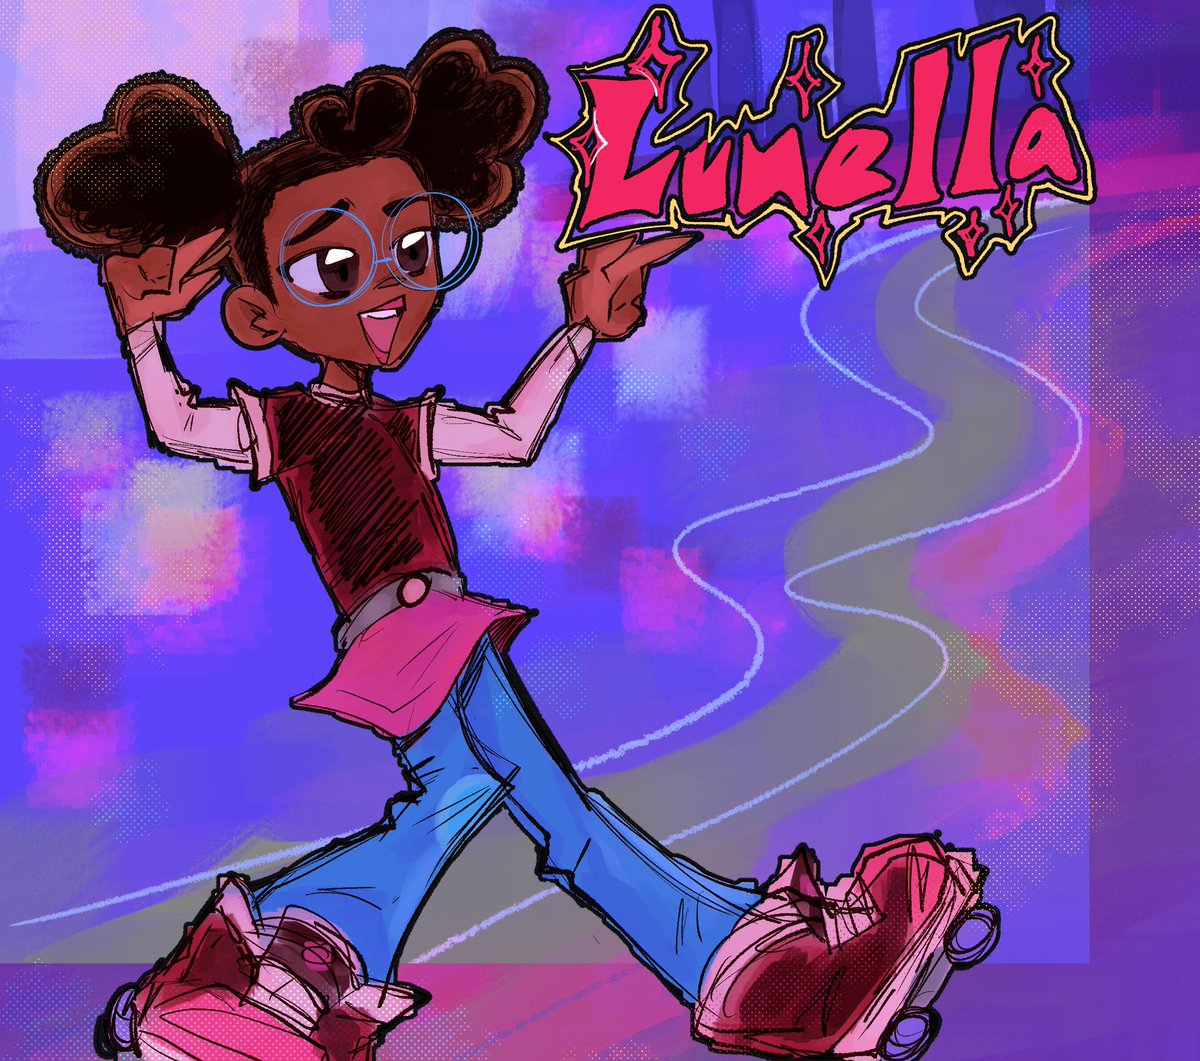 #MoonGirlAndDevilDinosaur
I love this show and I love drawing lunella